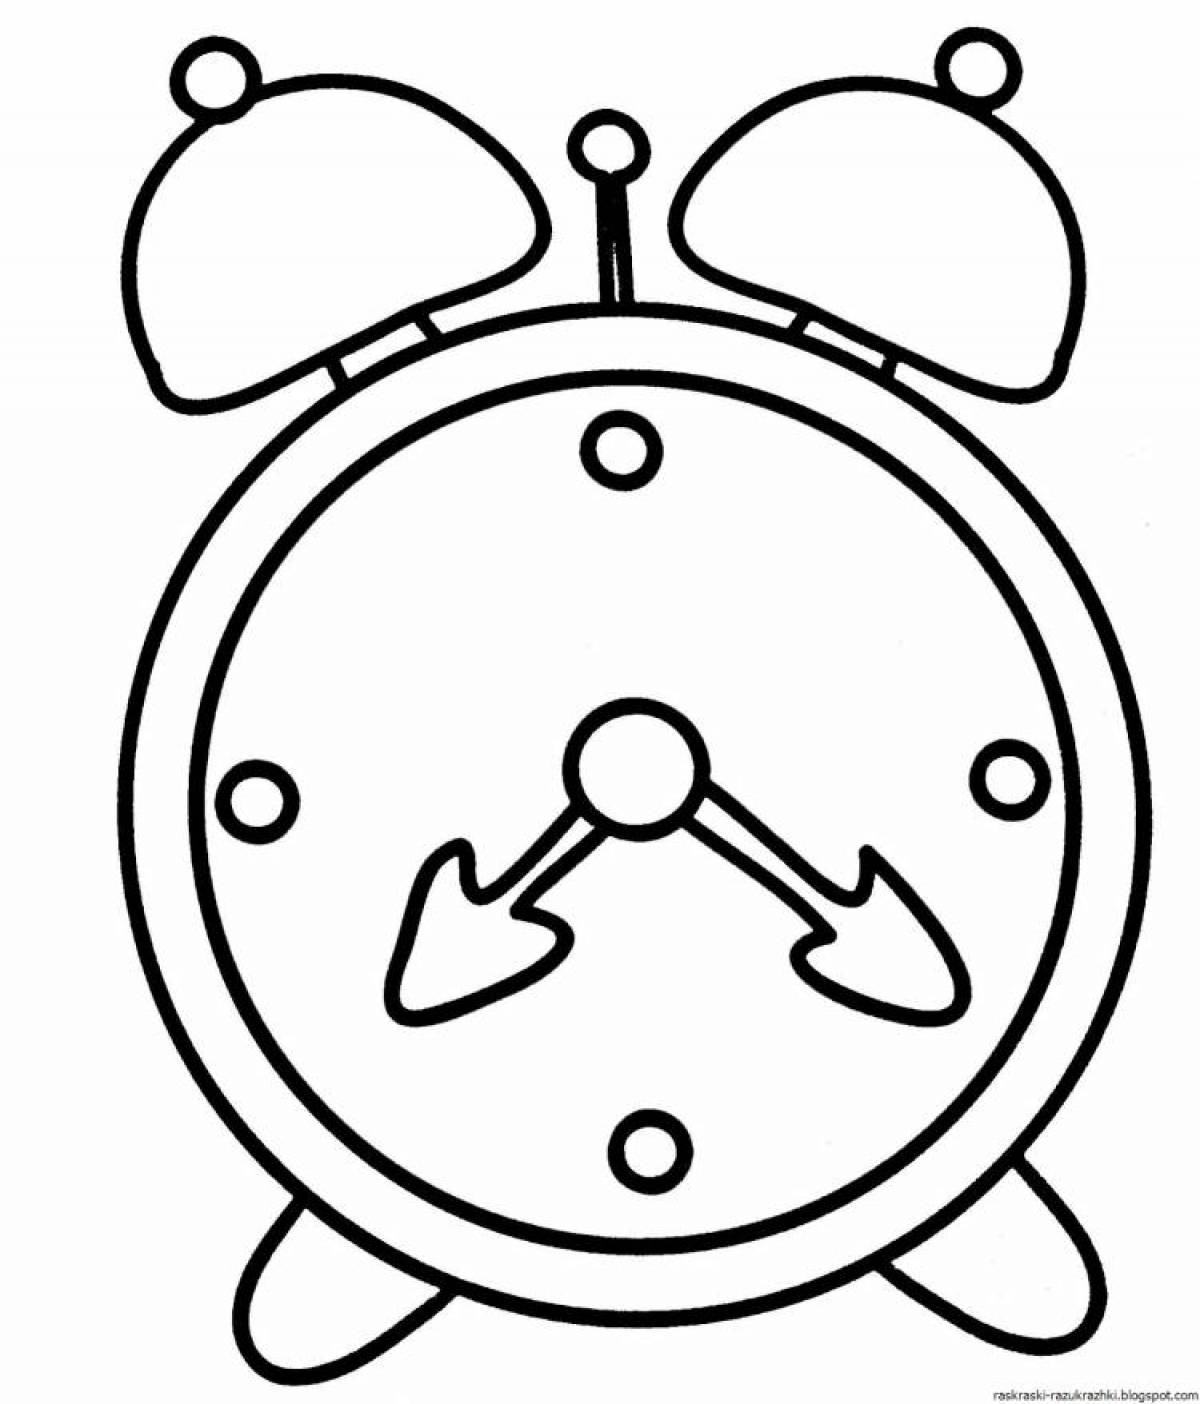 Refined alarm clock coloring page